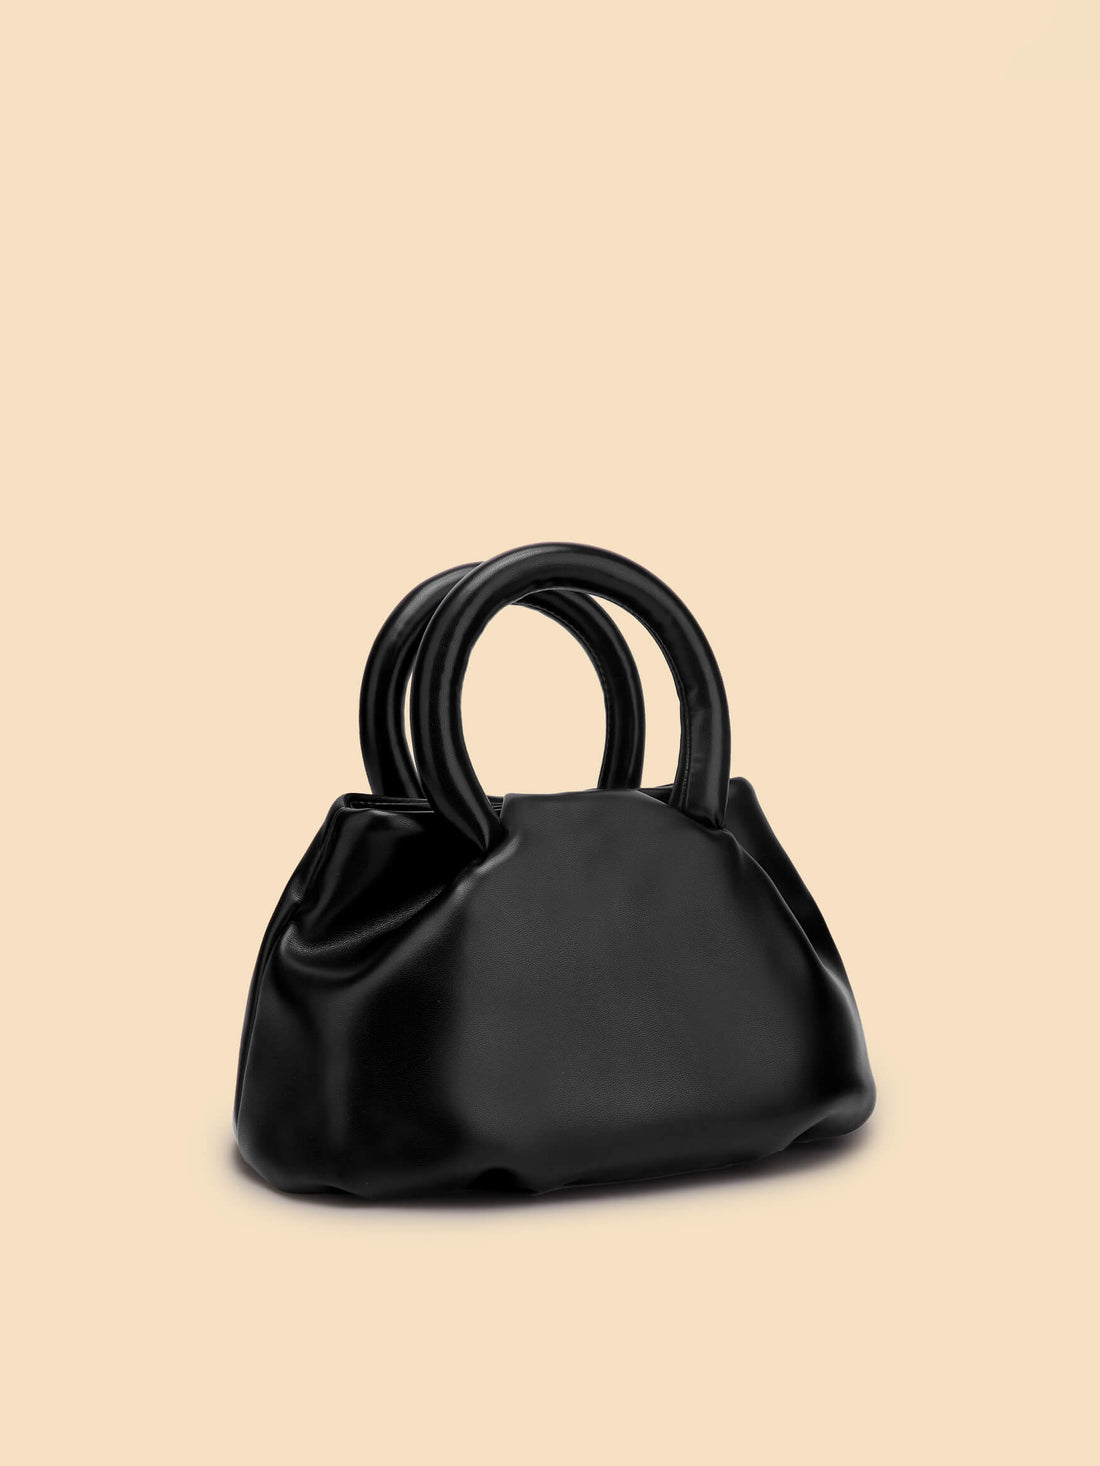 SINBONO Gal Black Leather Handbags -Vegan Leather Women Bag